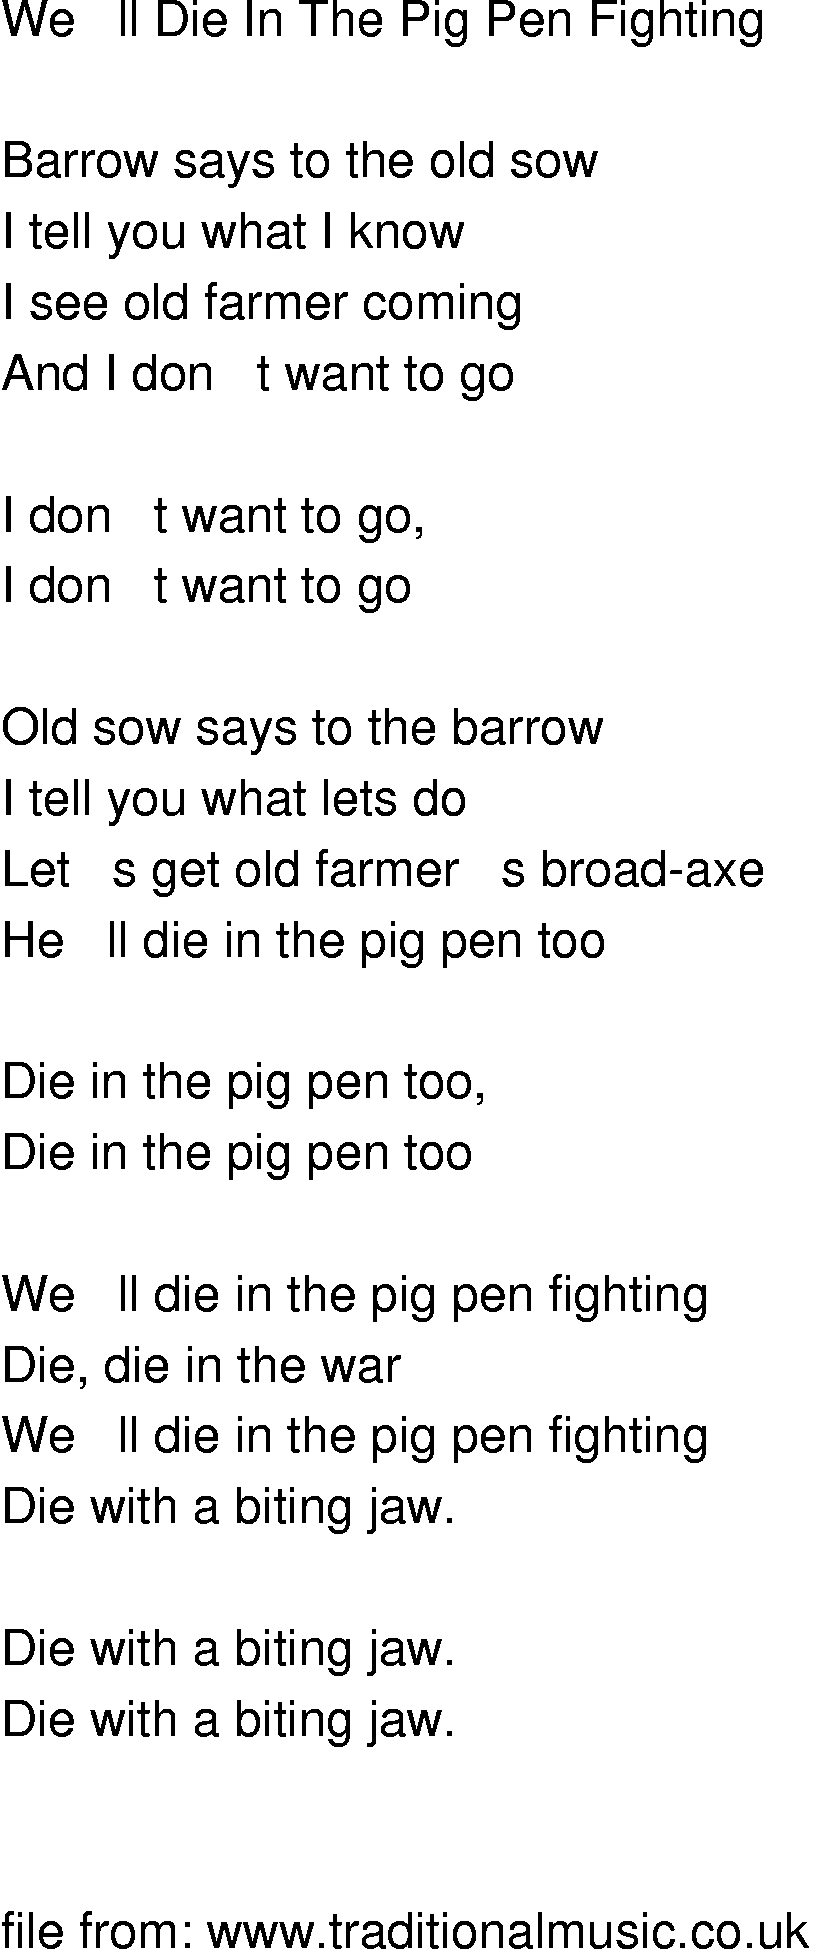 Old-Time (oldtimey) Song Lyrics - we'll die in the pig pen fighting